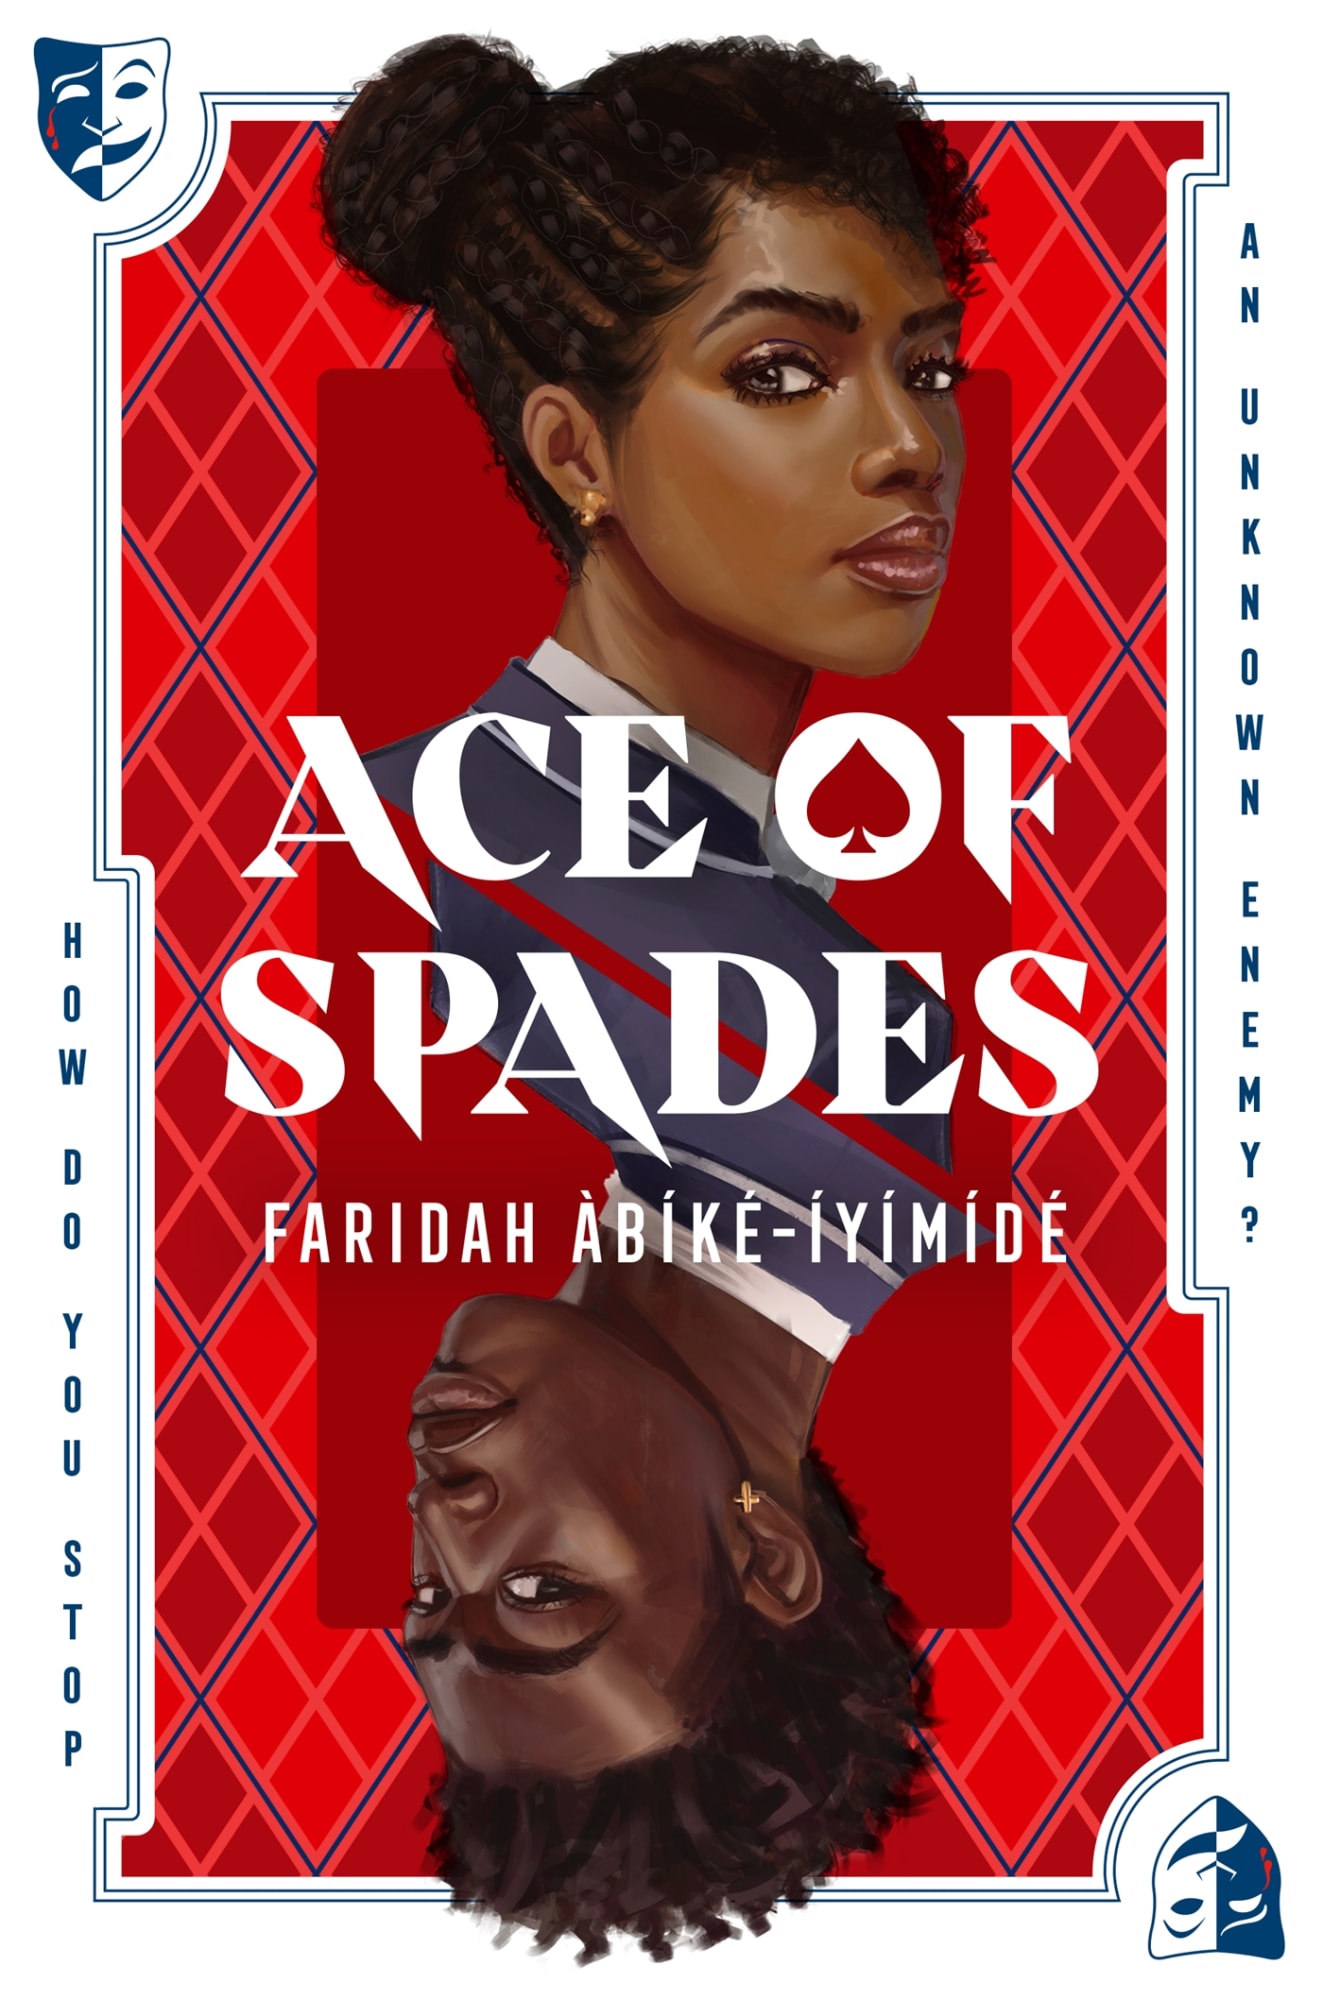 ace of spades near me